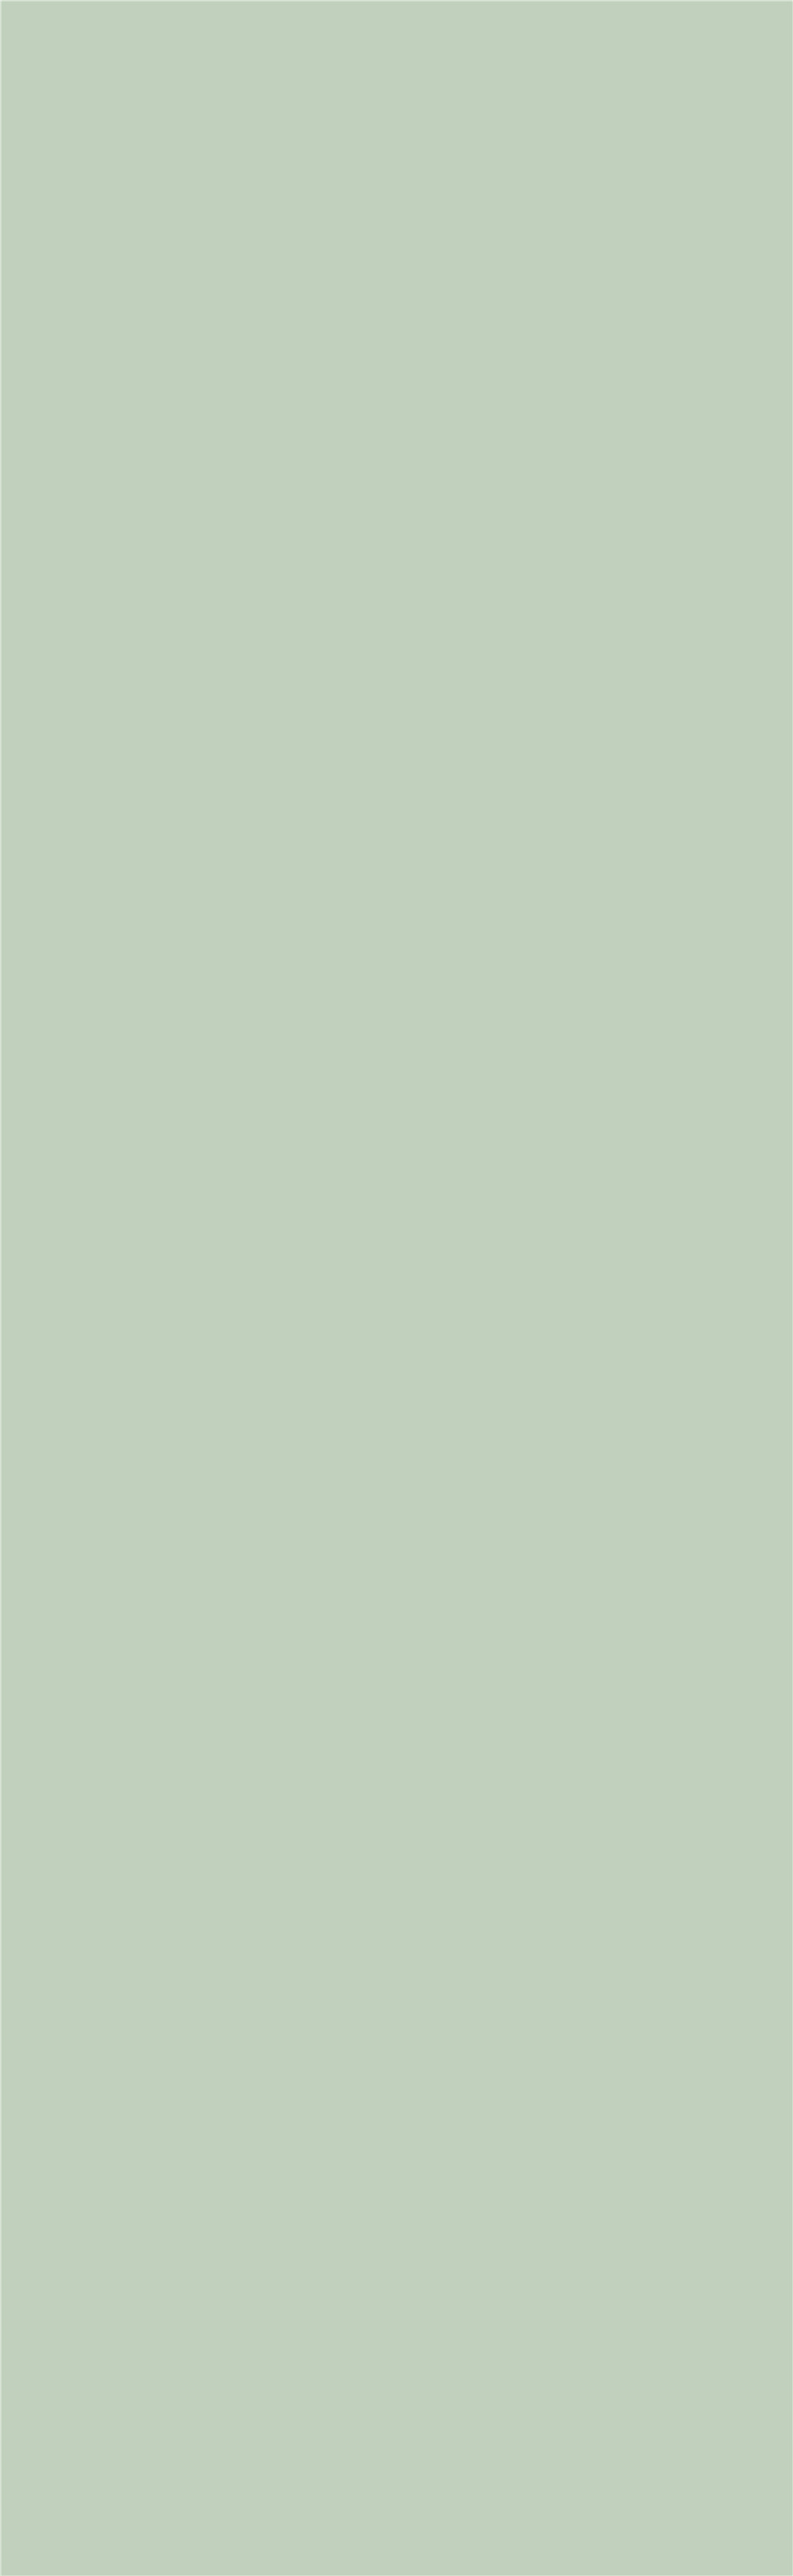 NF-LB260845-014浅暖绿纯色瓷砖